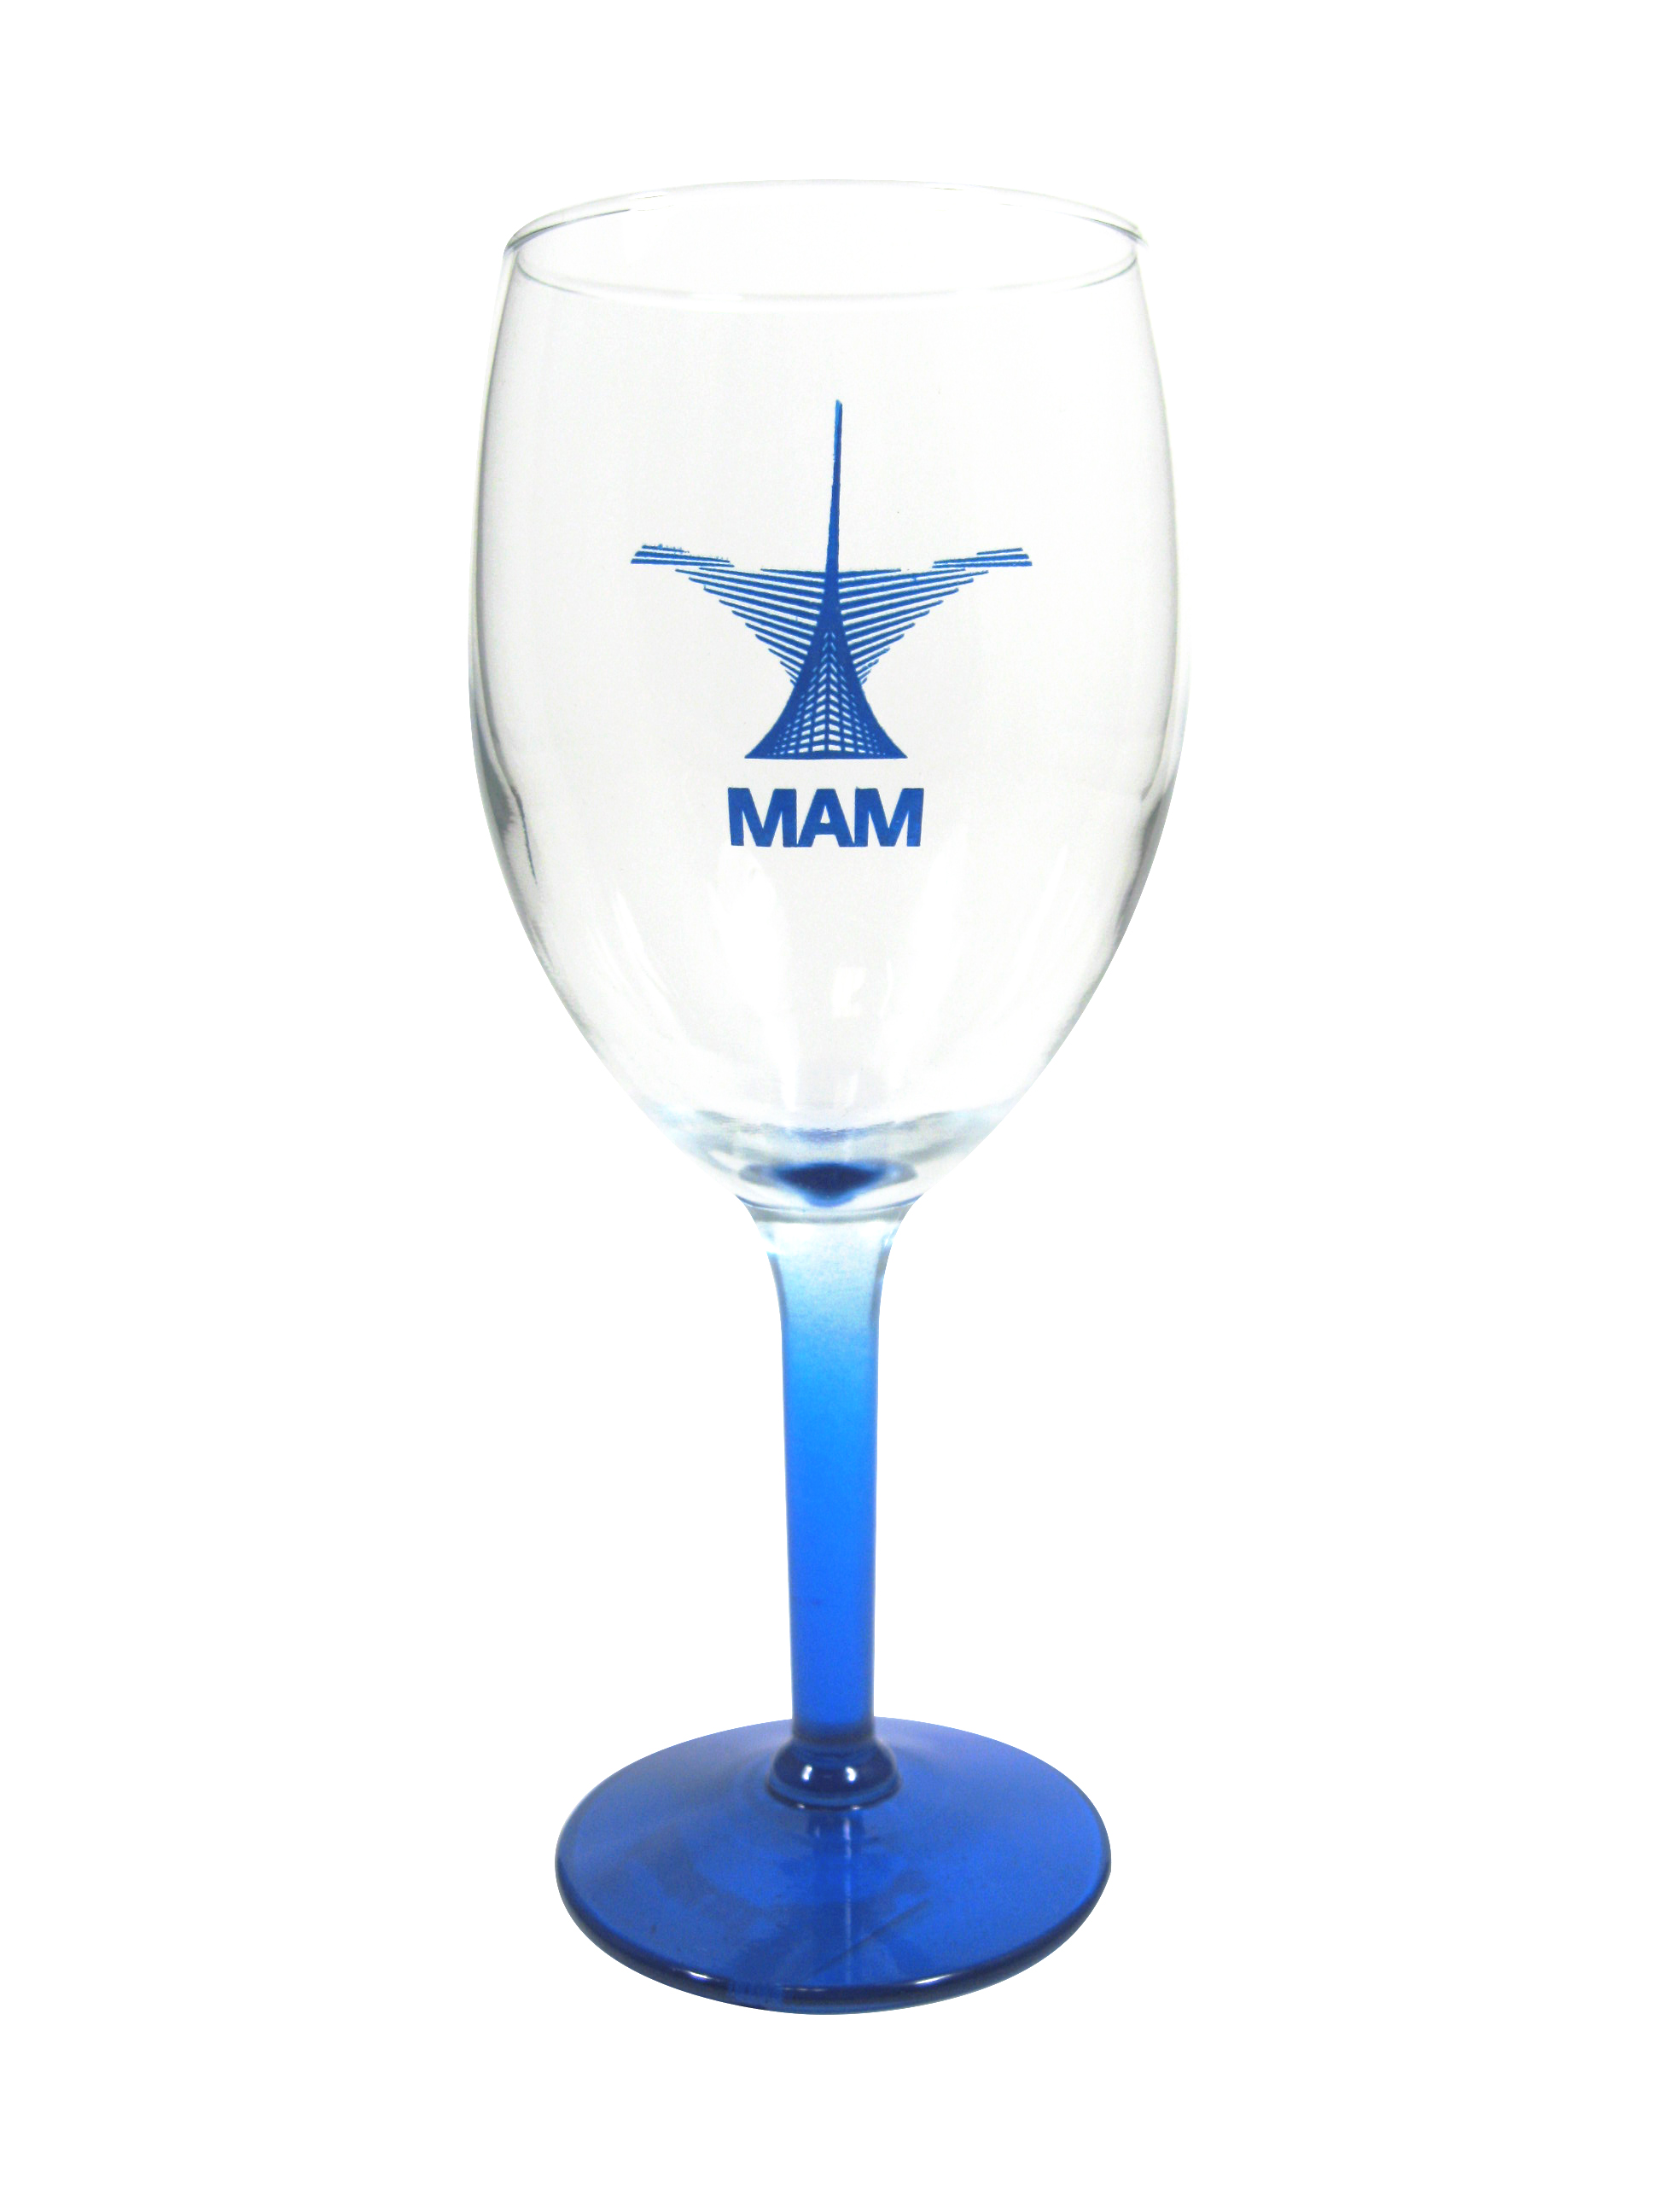 MAM wine glass